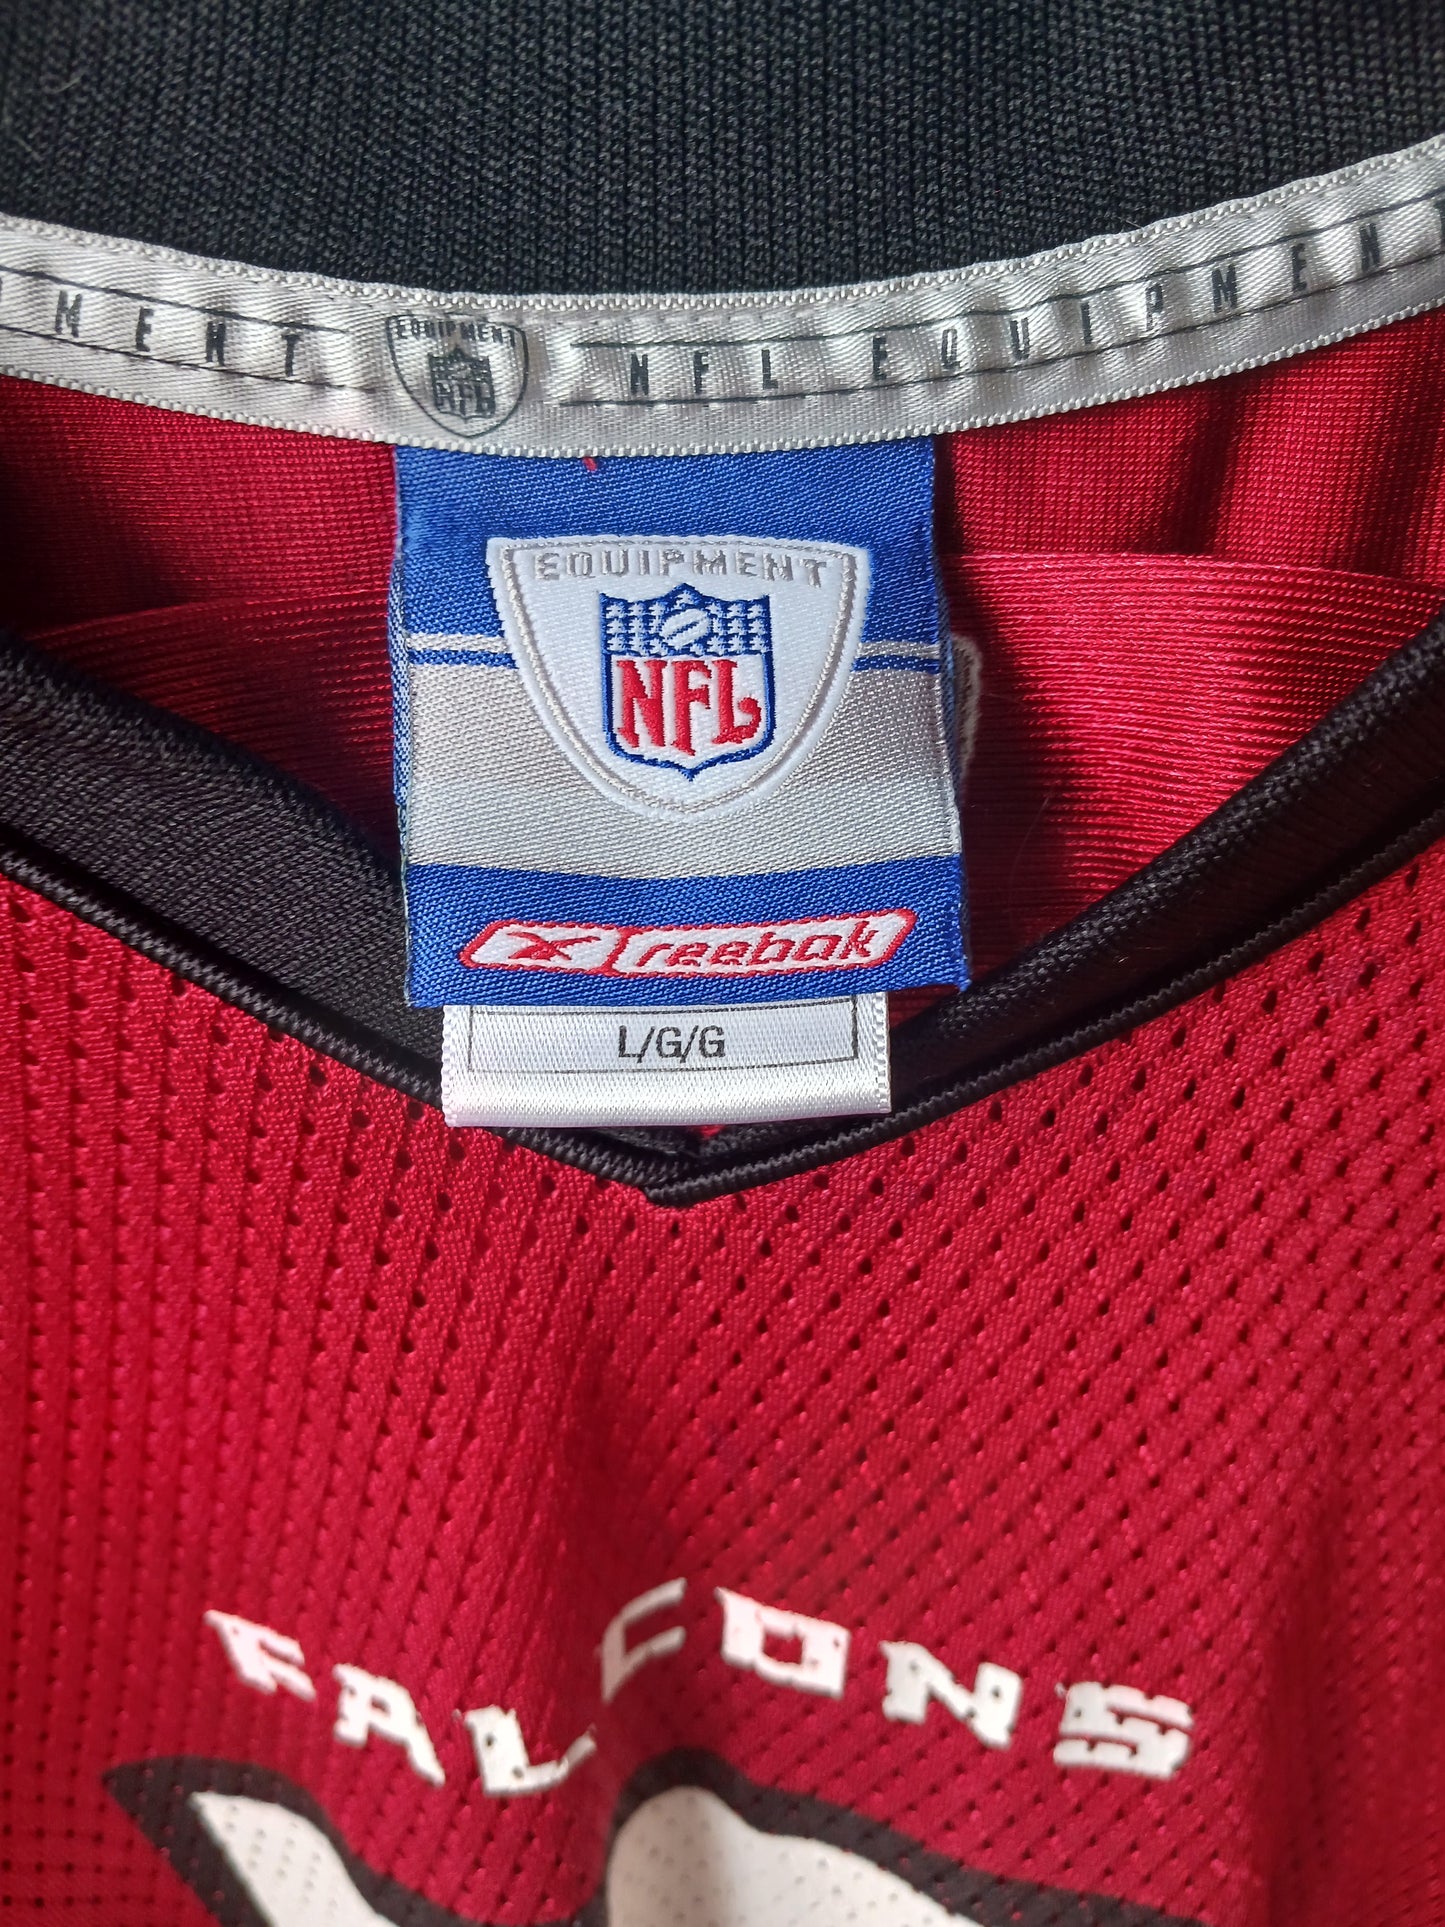 Atlanta Falcons Vick Jersey, #7, Official NFL Reebok